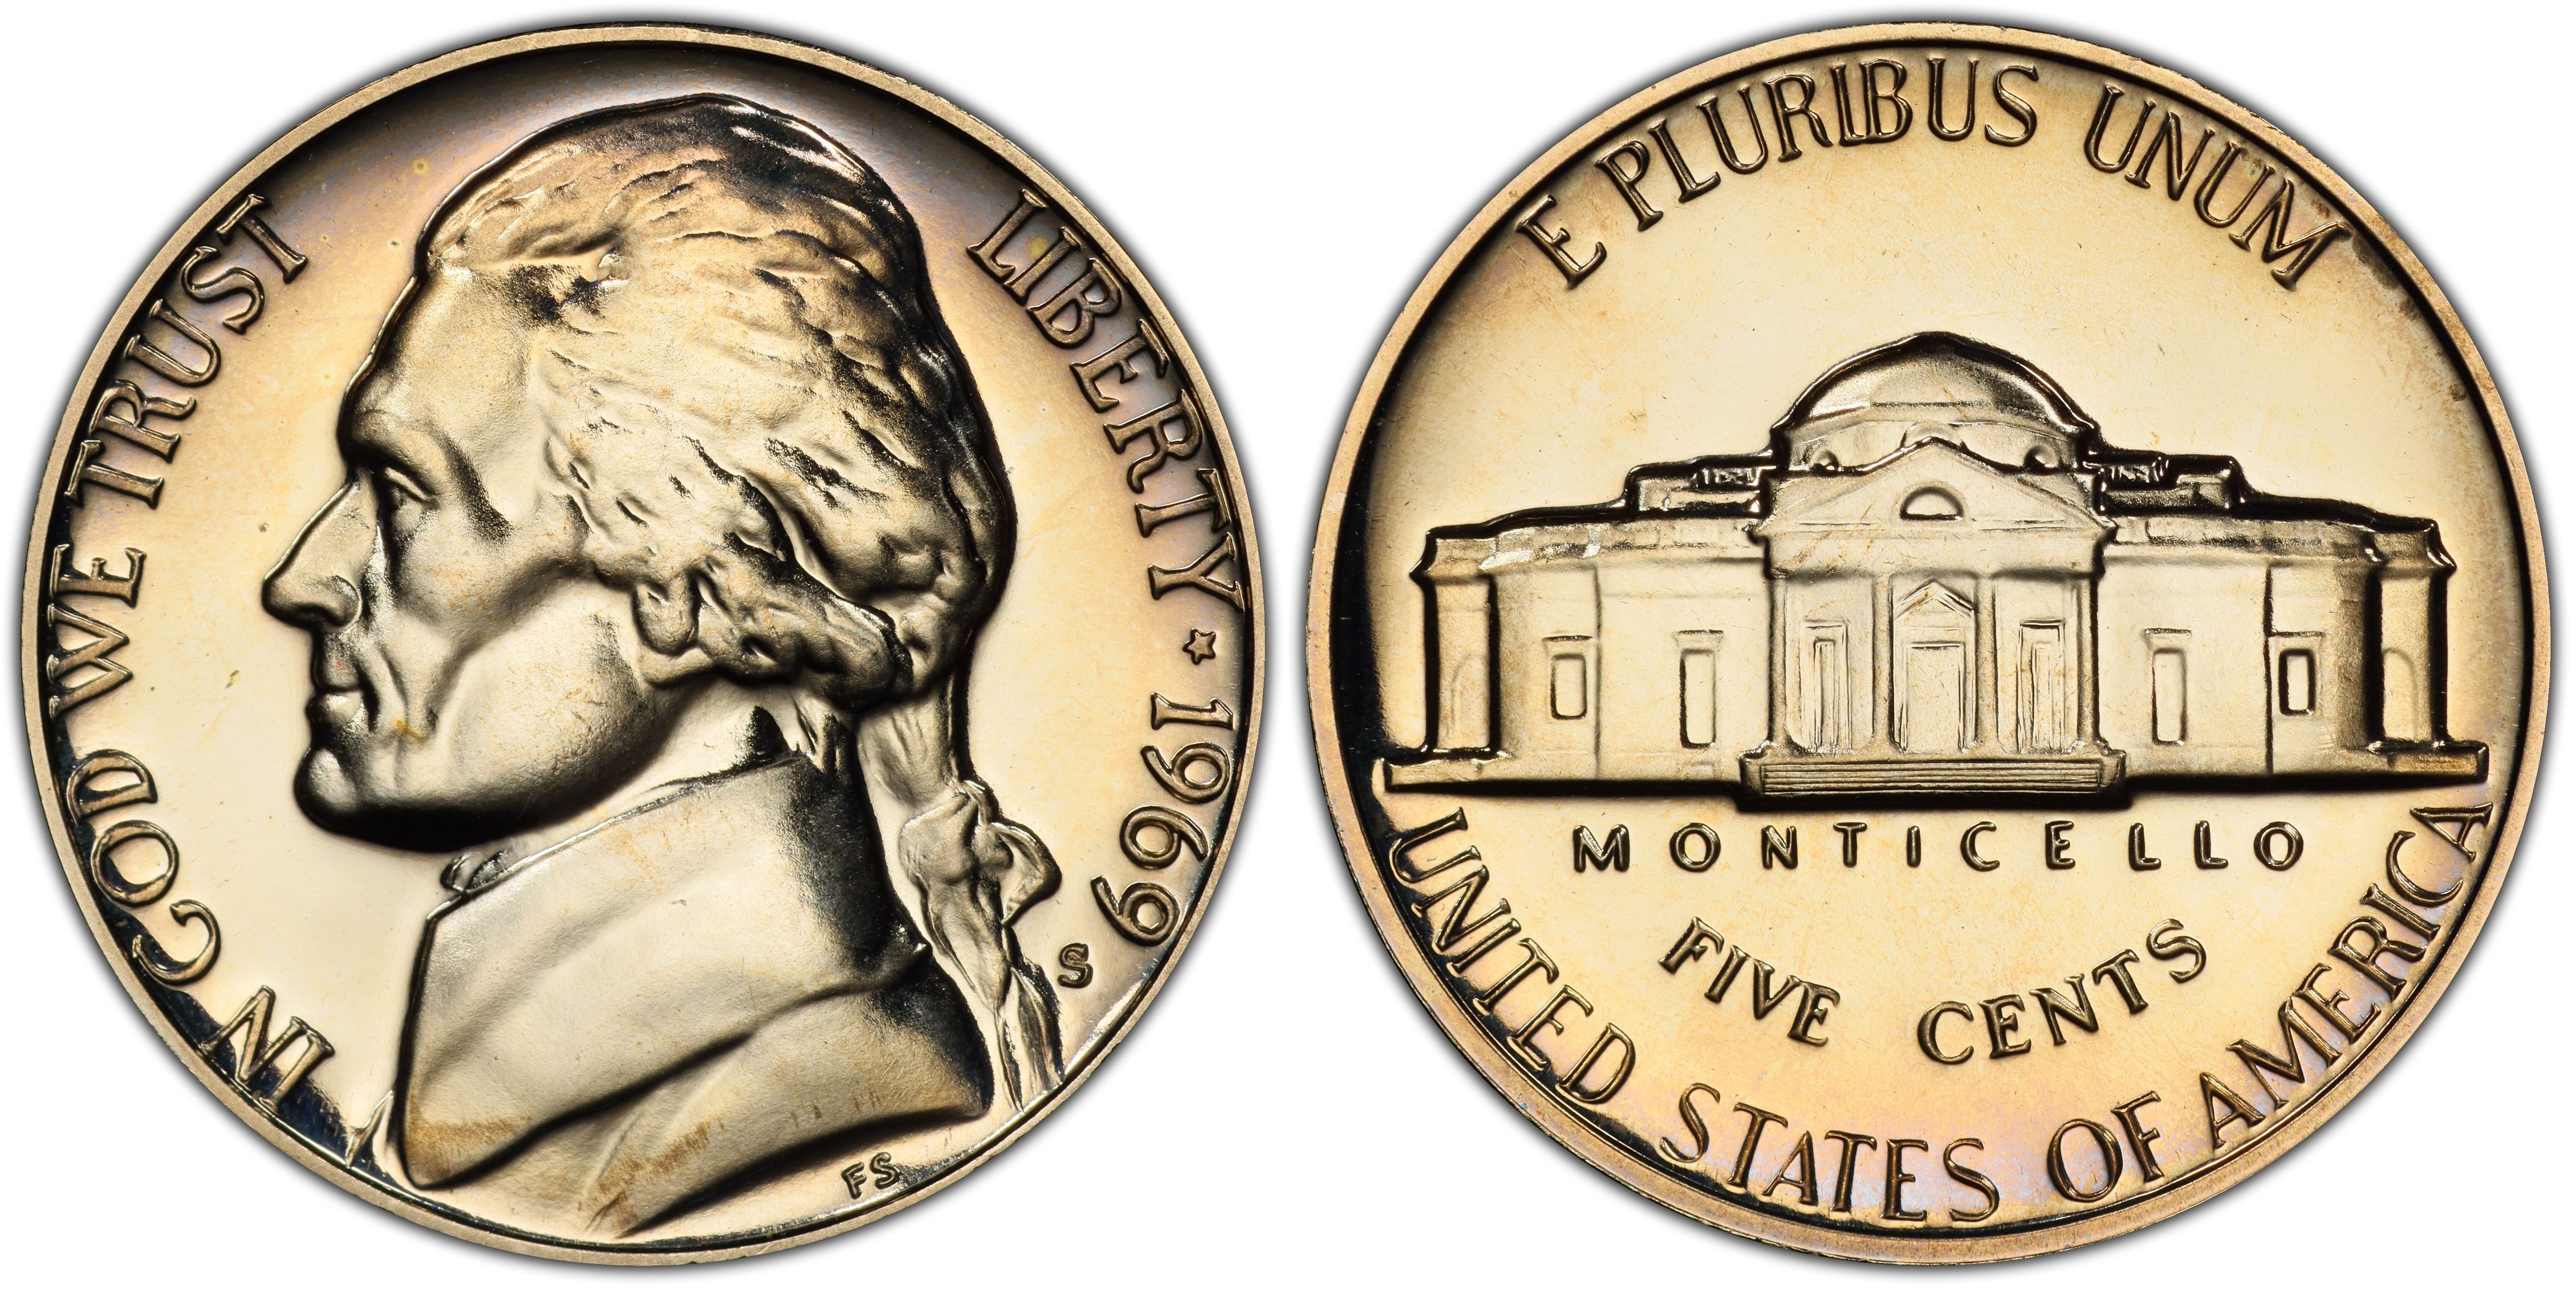 Proof JEFFERSON Nickel US Mint * Lot of 2 Coins PCGS PR69 2018-S Reverse Proof 